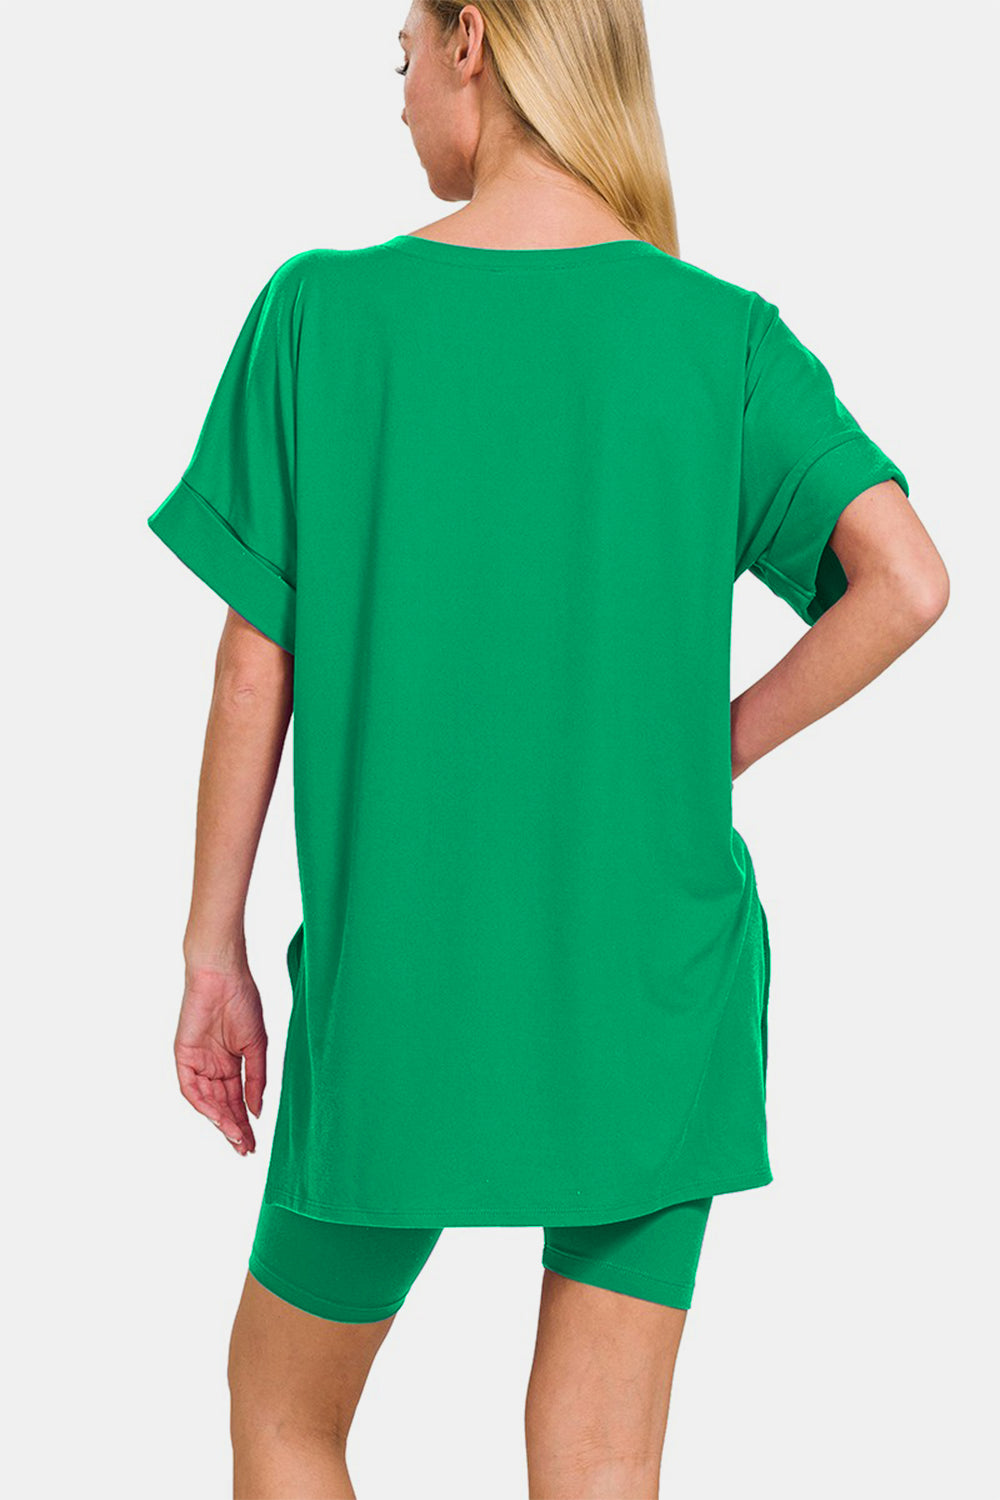 Off-Duty Style - T-Shirt and Biker Shorts Set - Green